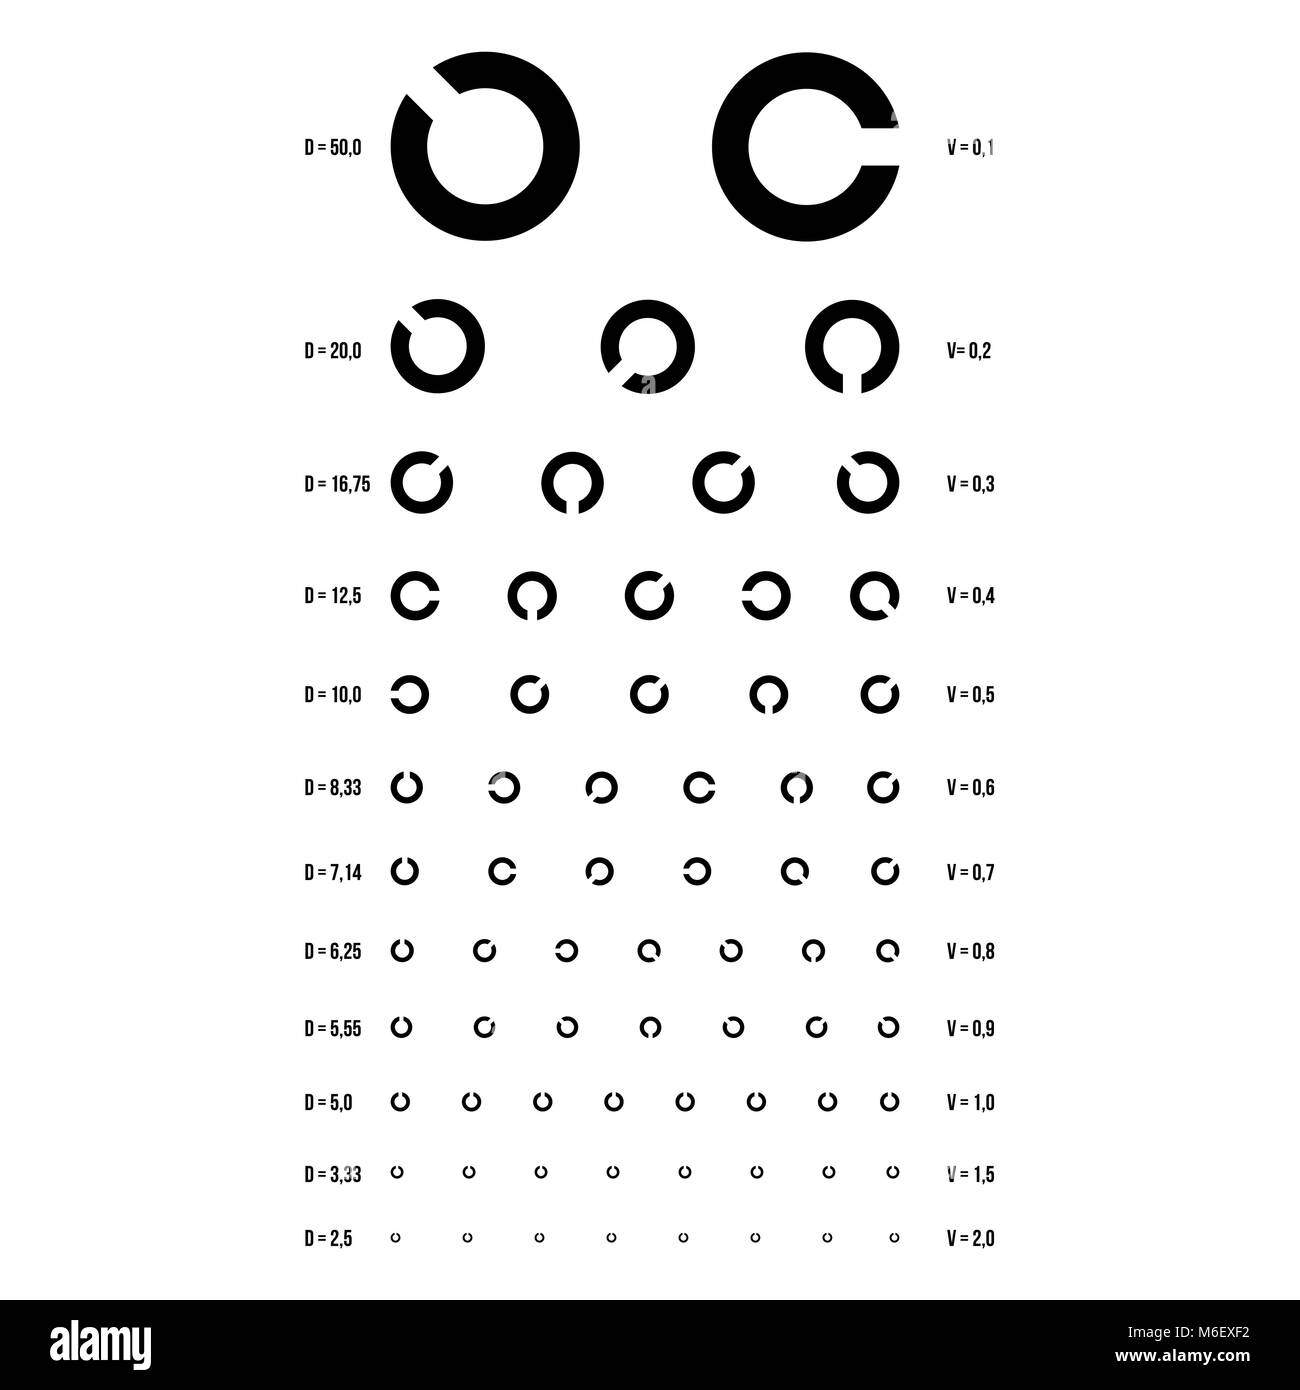 Eyesight Measurement Chart